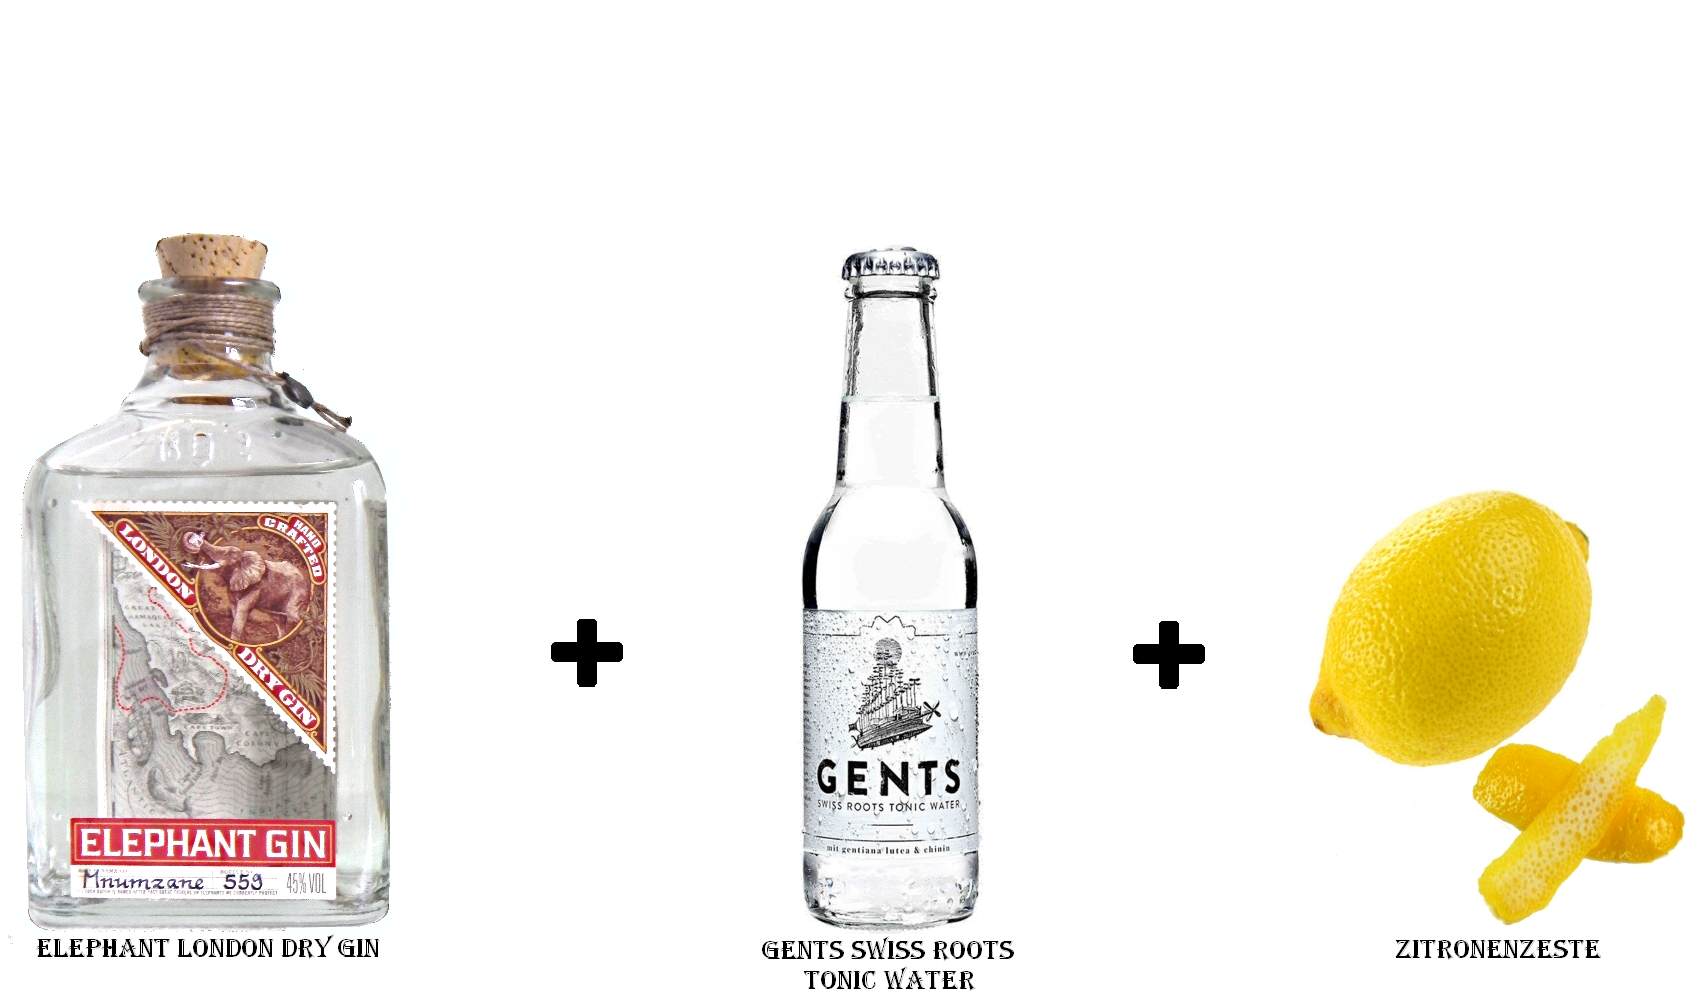 Elephant London Dry Gin + Gents Swiss Roots Tonic Water + Zitronenzeste